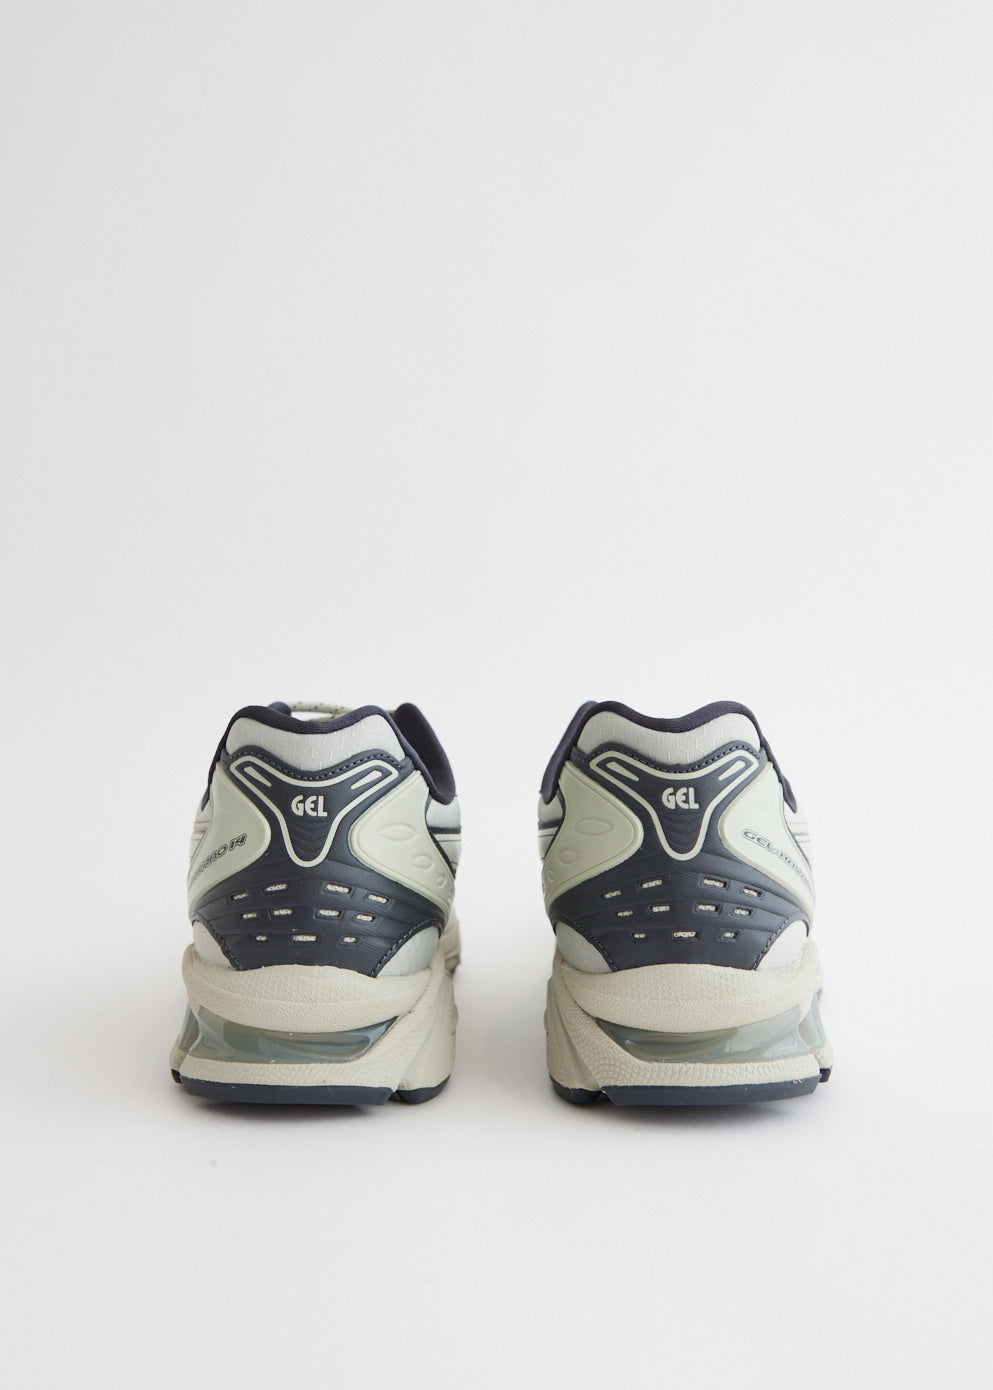 Gel-Kayano 14 Earthenware Pack 'White Sage' Sneakers